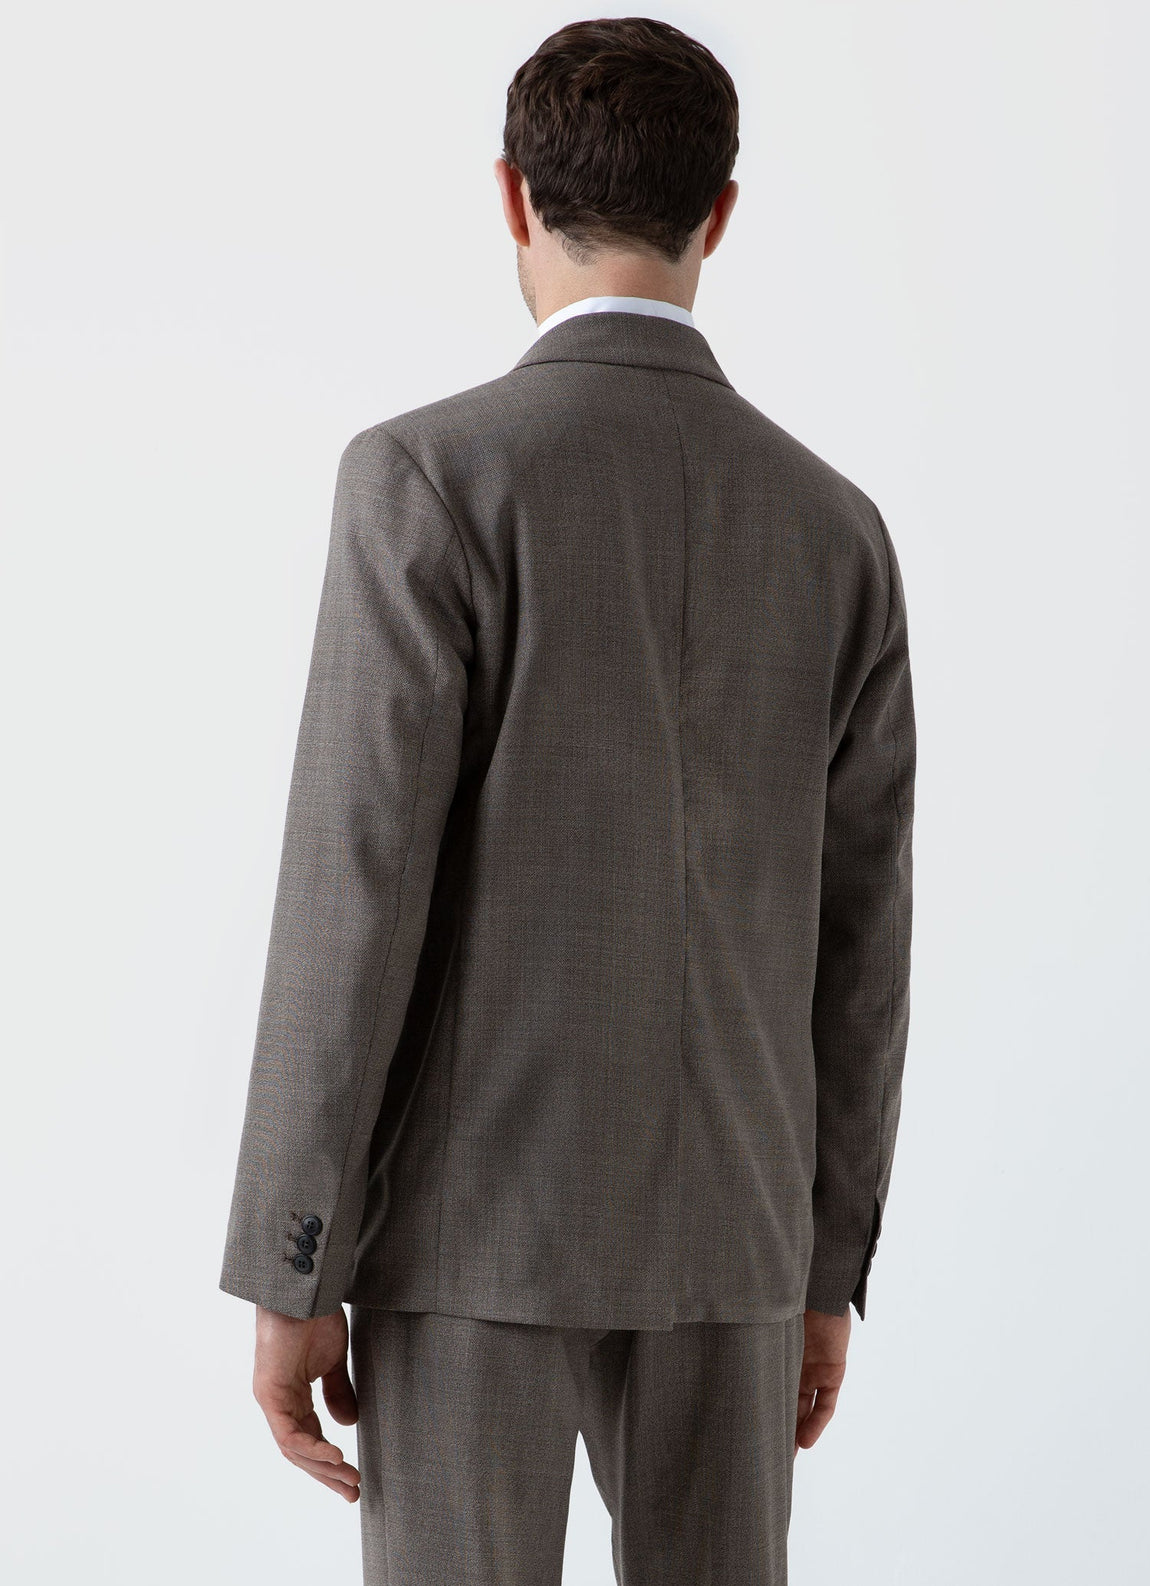 Men's Travel Wool Two-Piece Suit in Dark Stone Melange